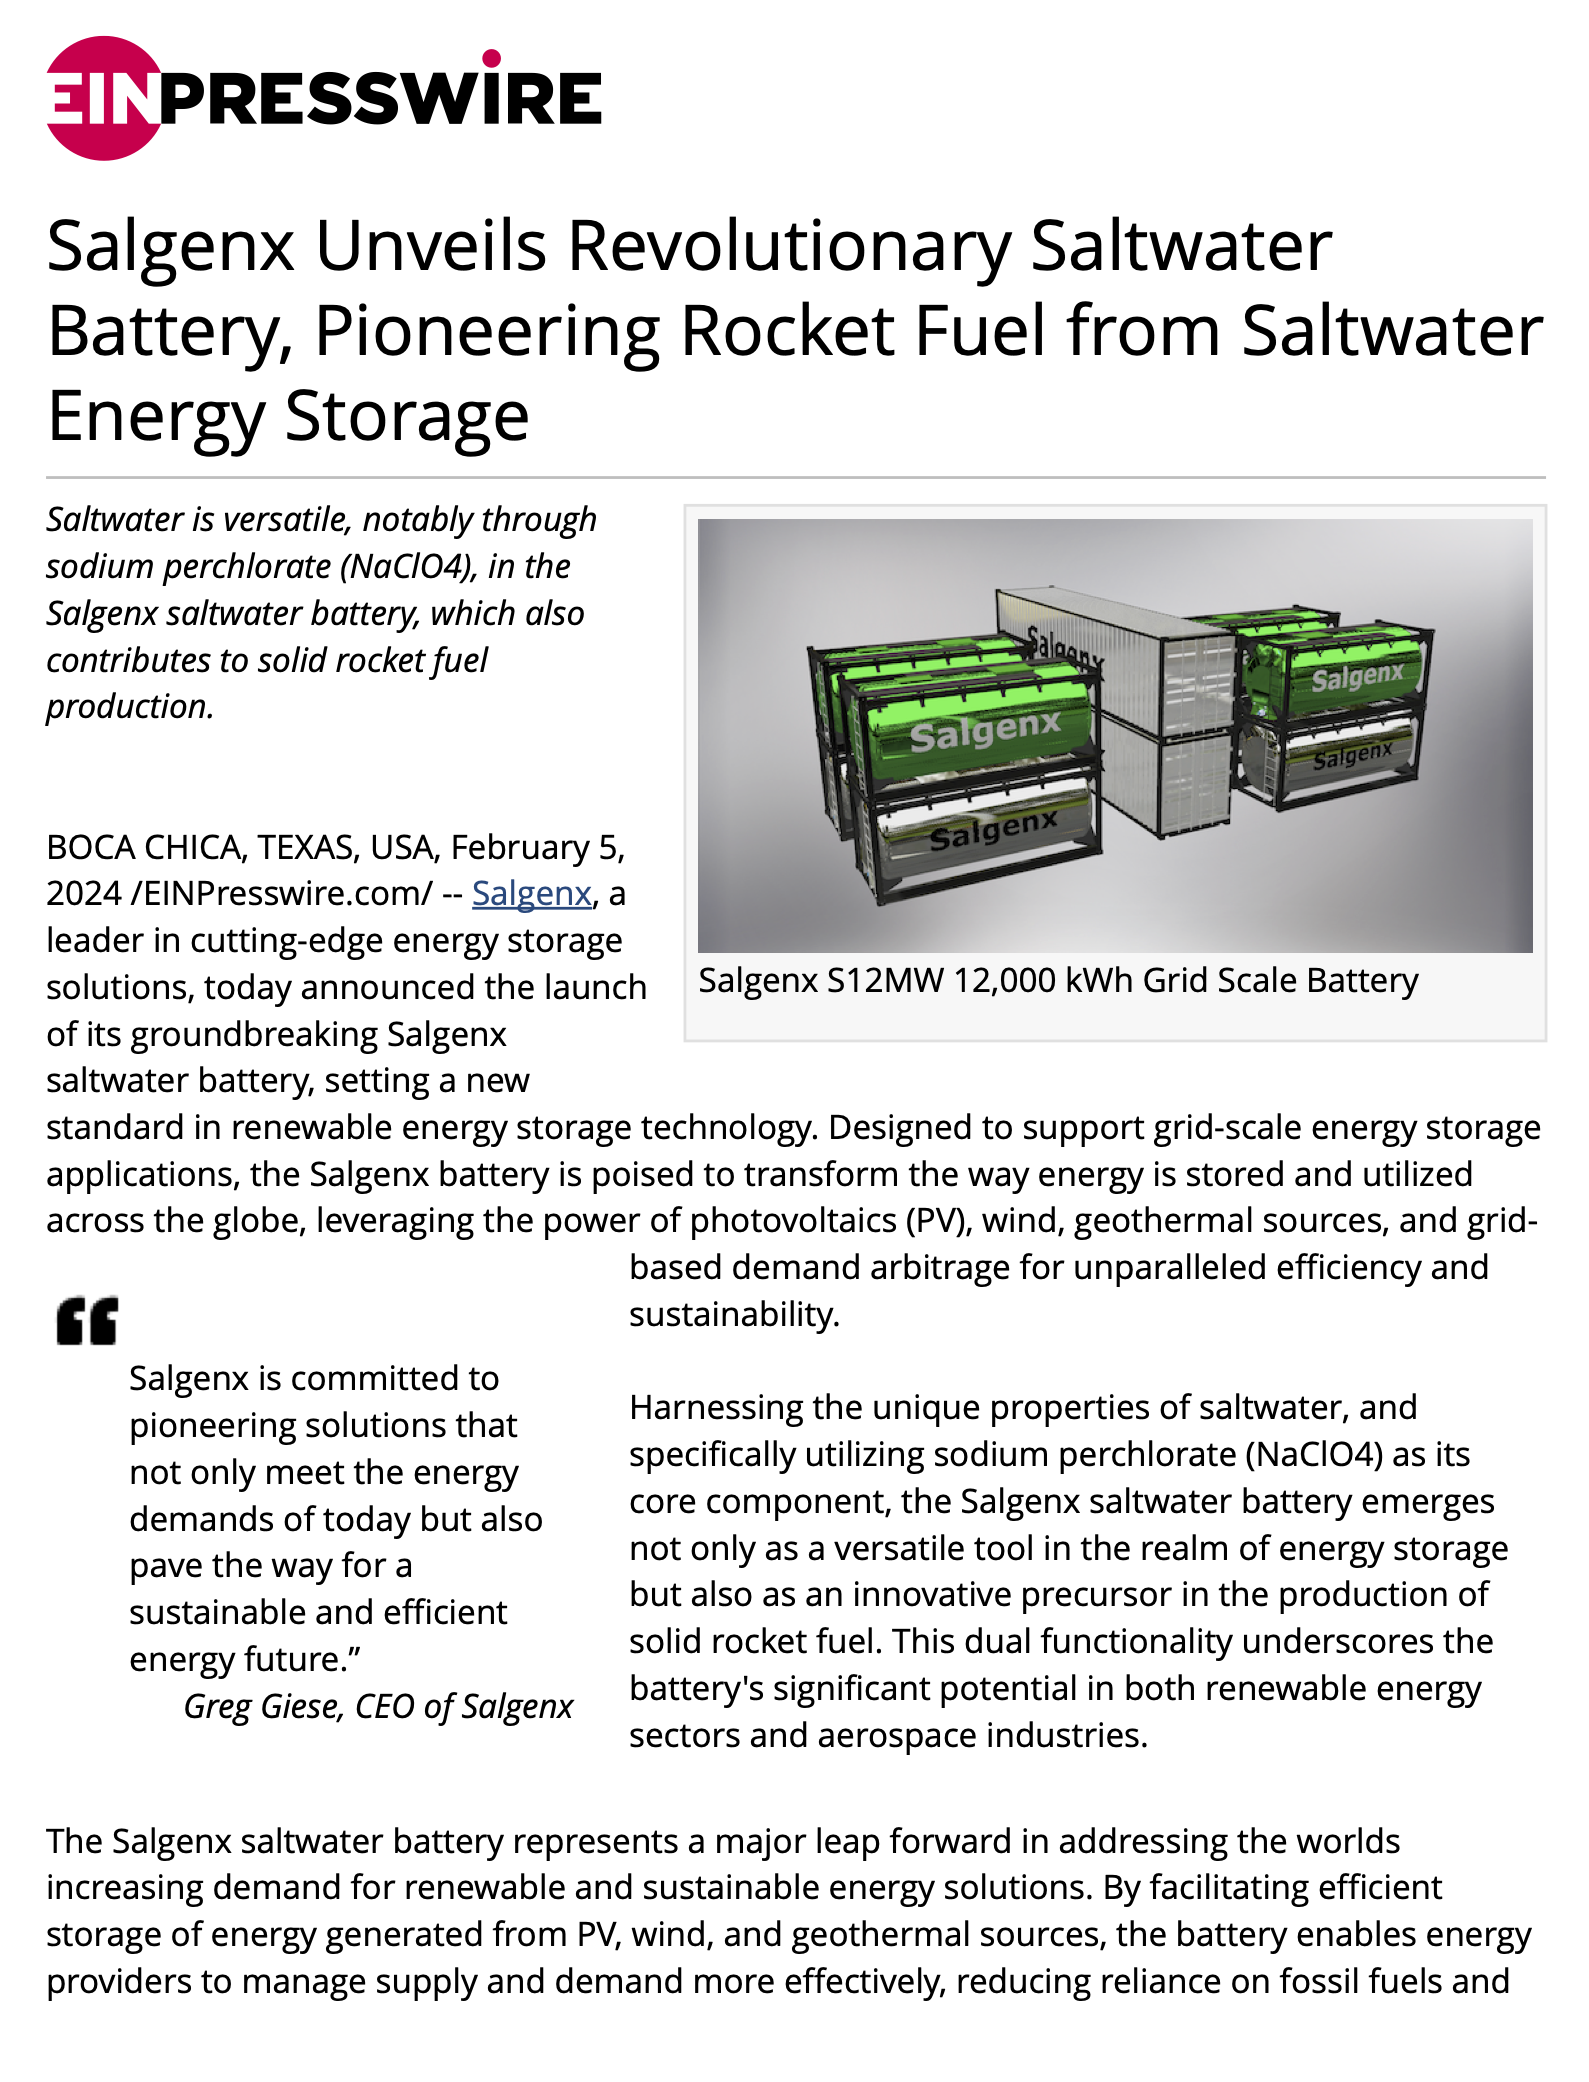 Salgenx Unveils Revolutionary Saltwater Battery, Pioneering Rocket Fuel from Saltwater Energy Storage